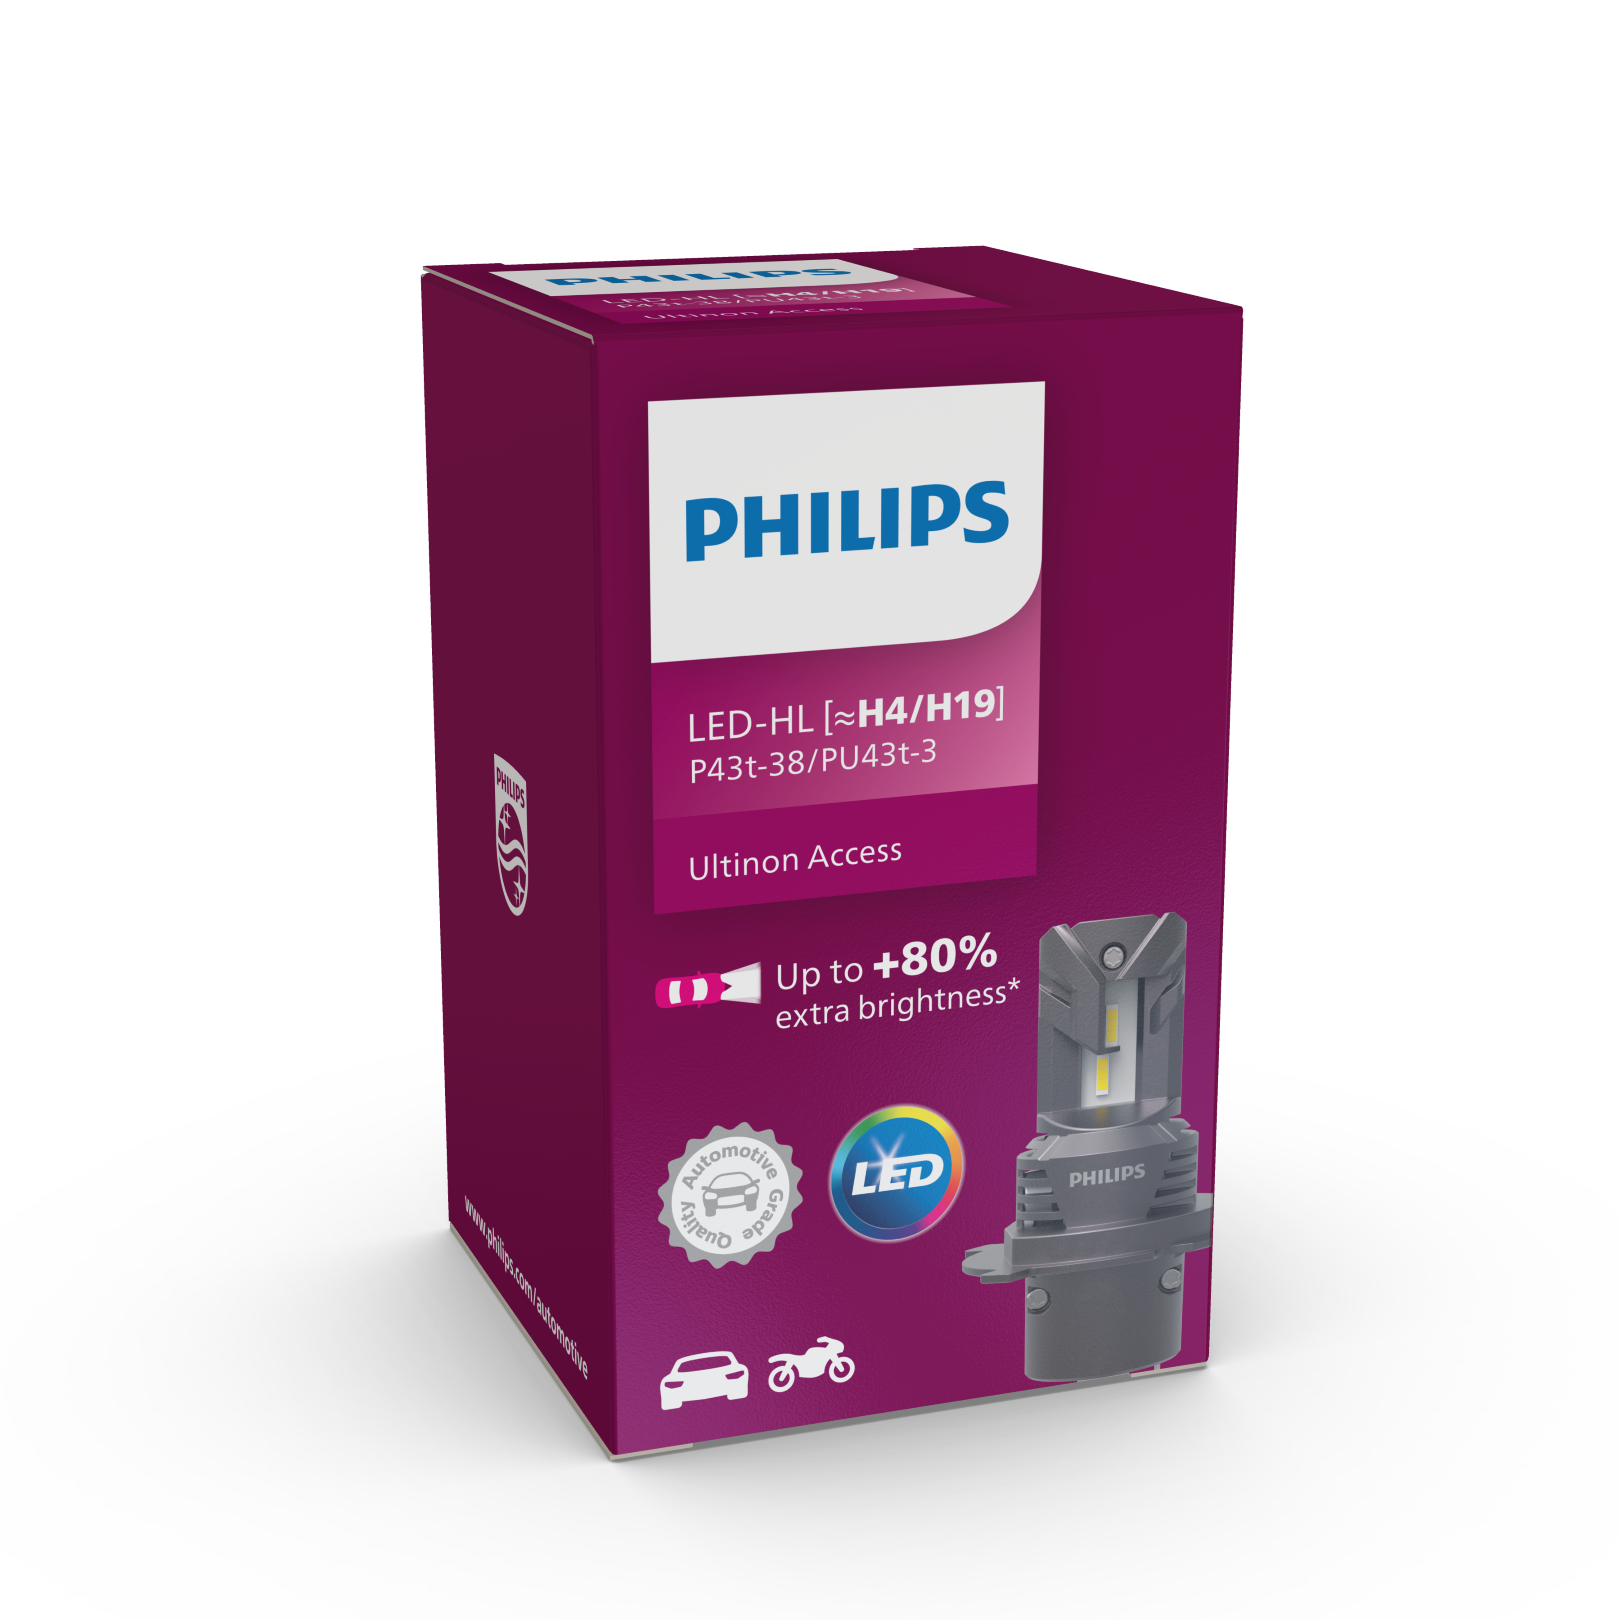 philips ultinon access led pack unite